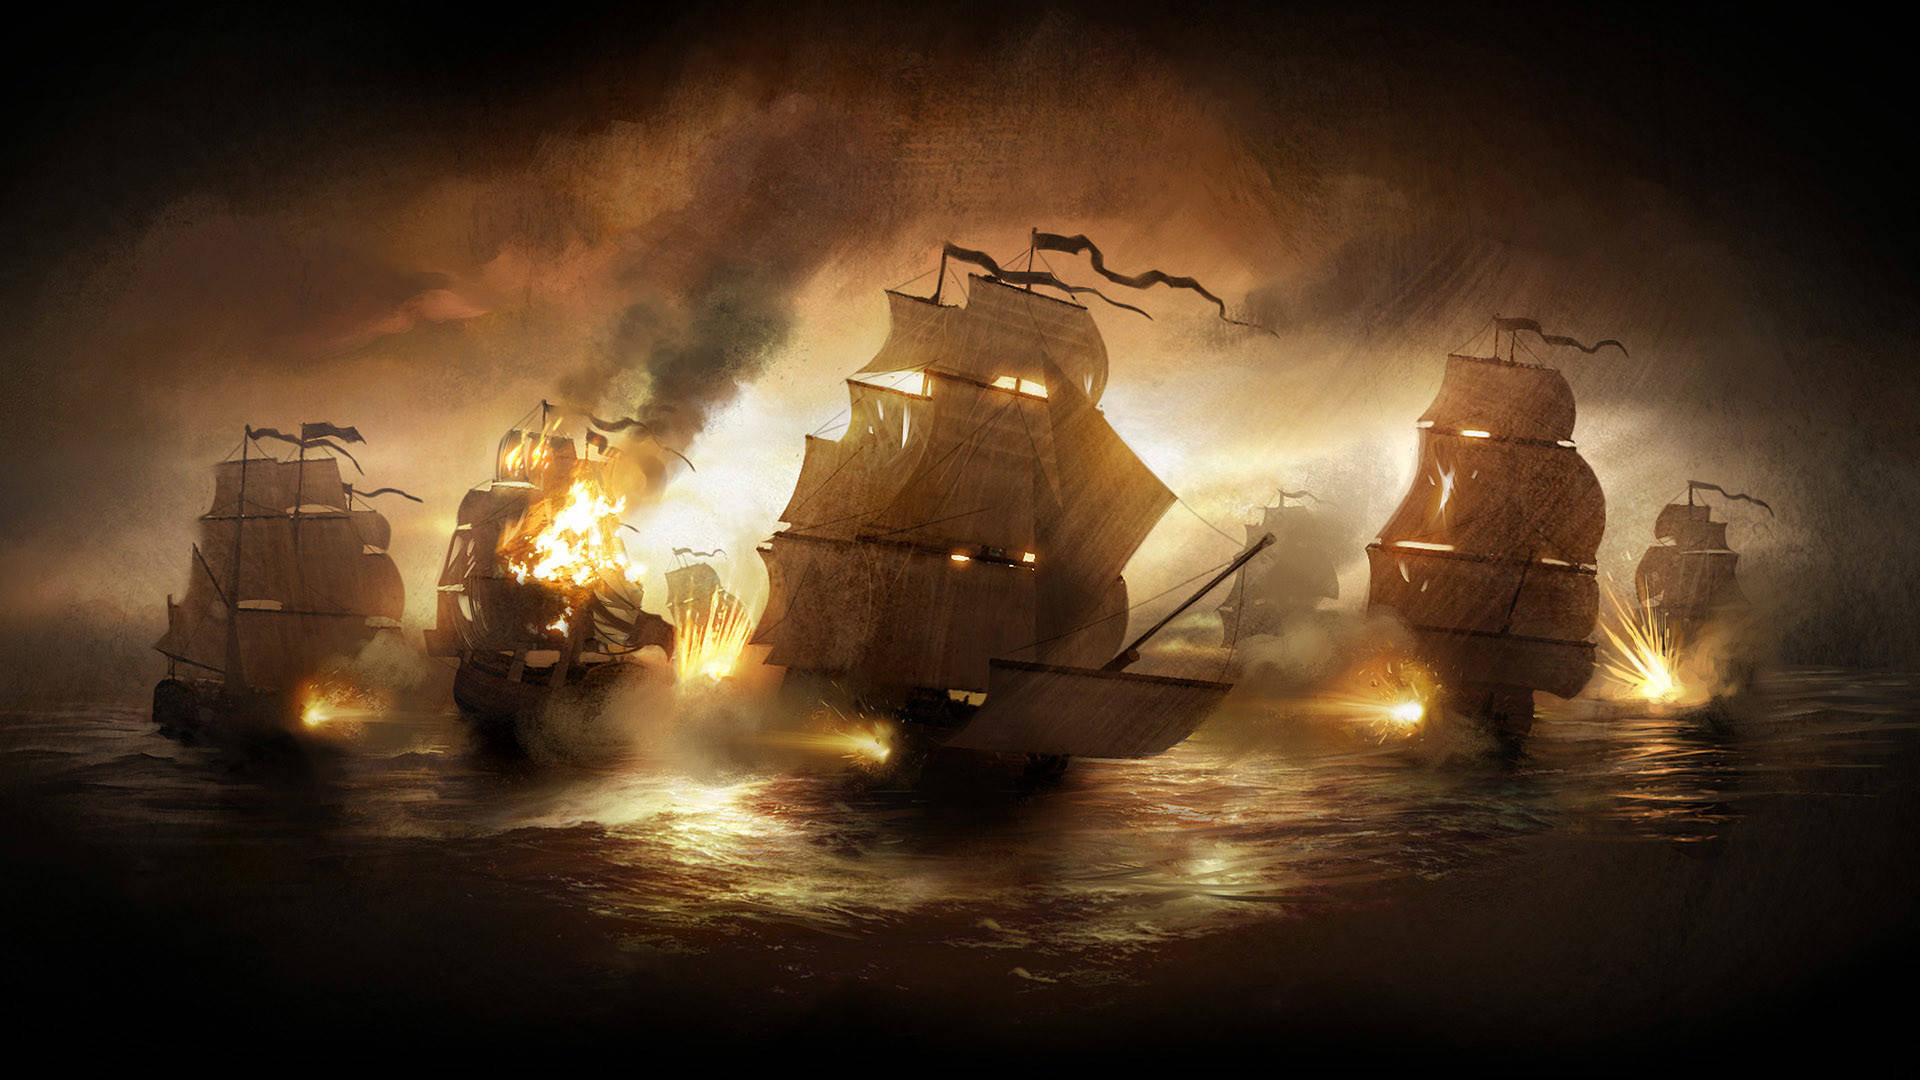 Pirate Ship On Fire Best Desktop